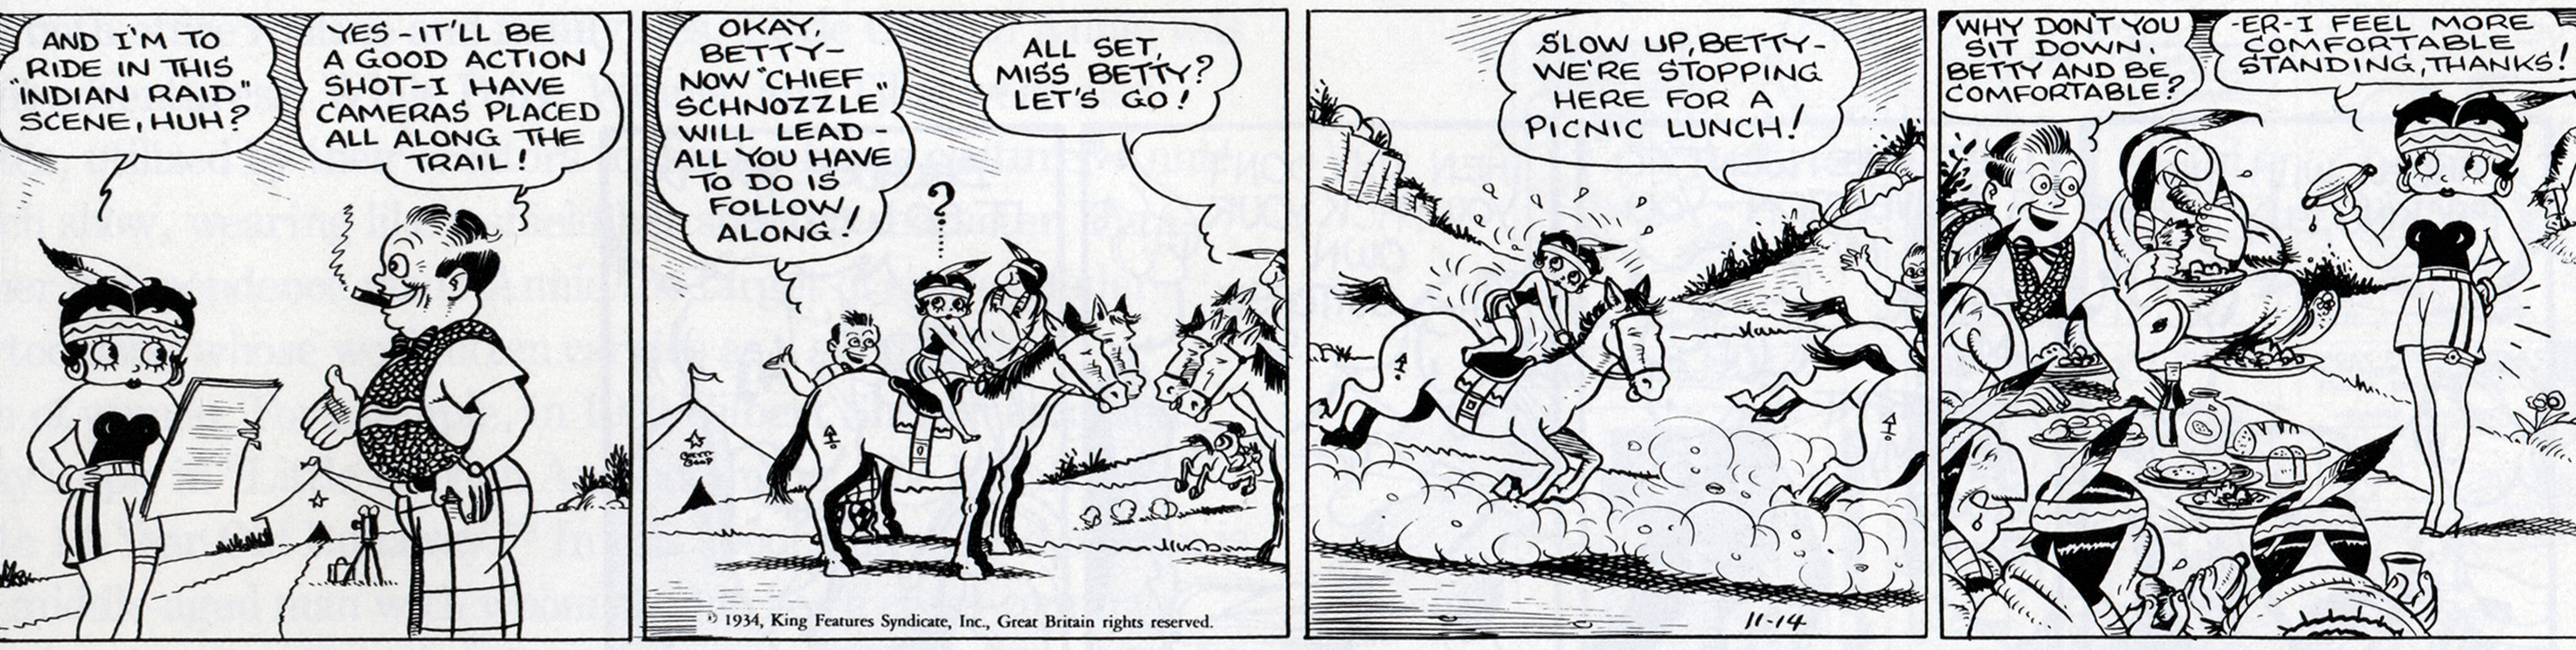 Fleischer & Counihan-Betty Boop-1934 strip